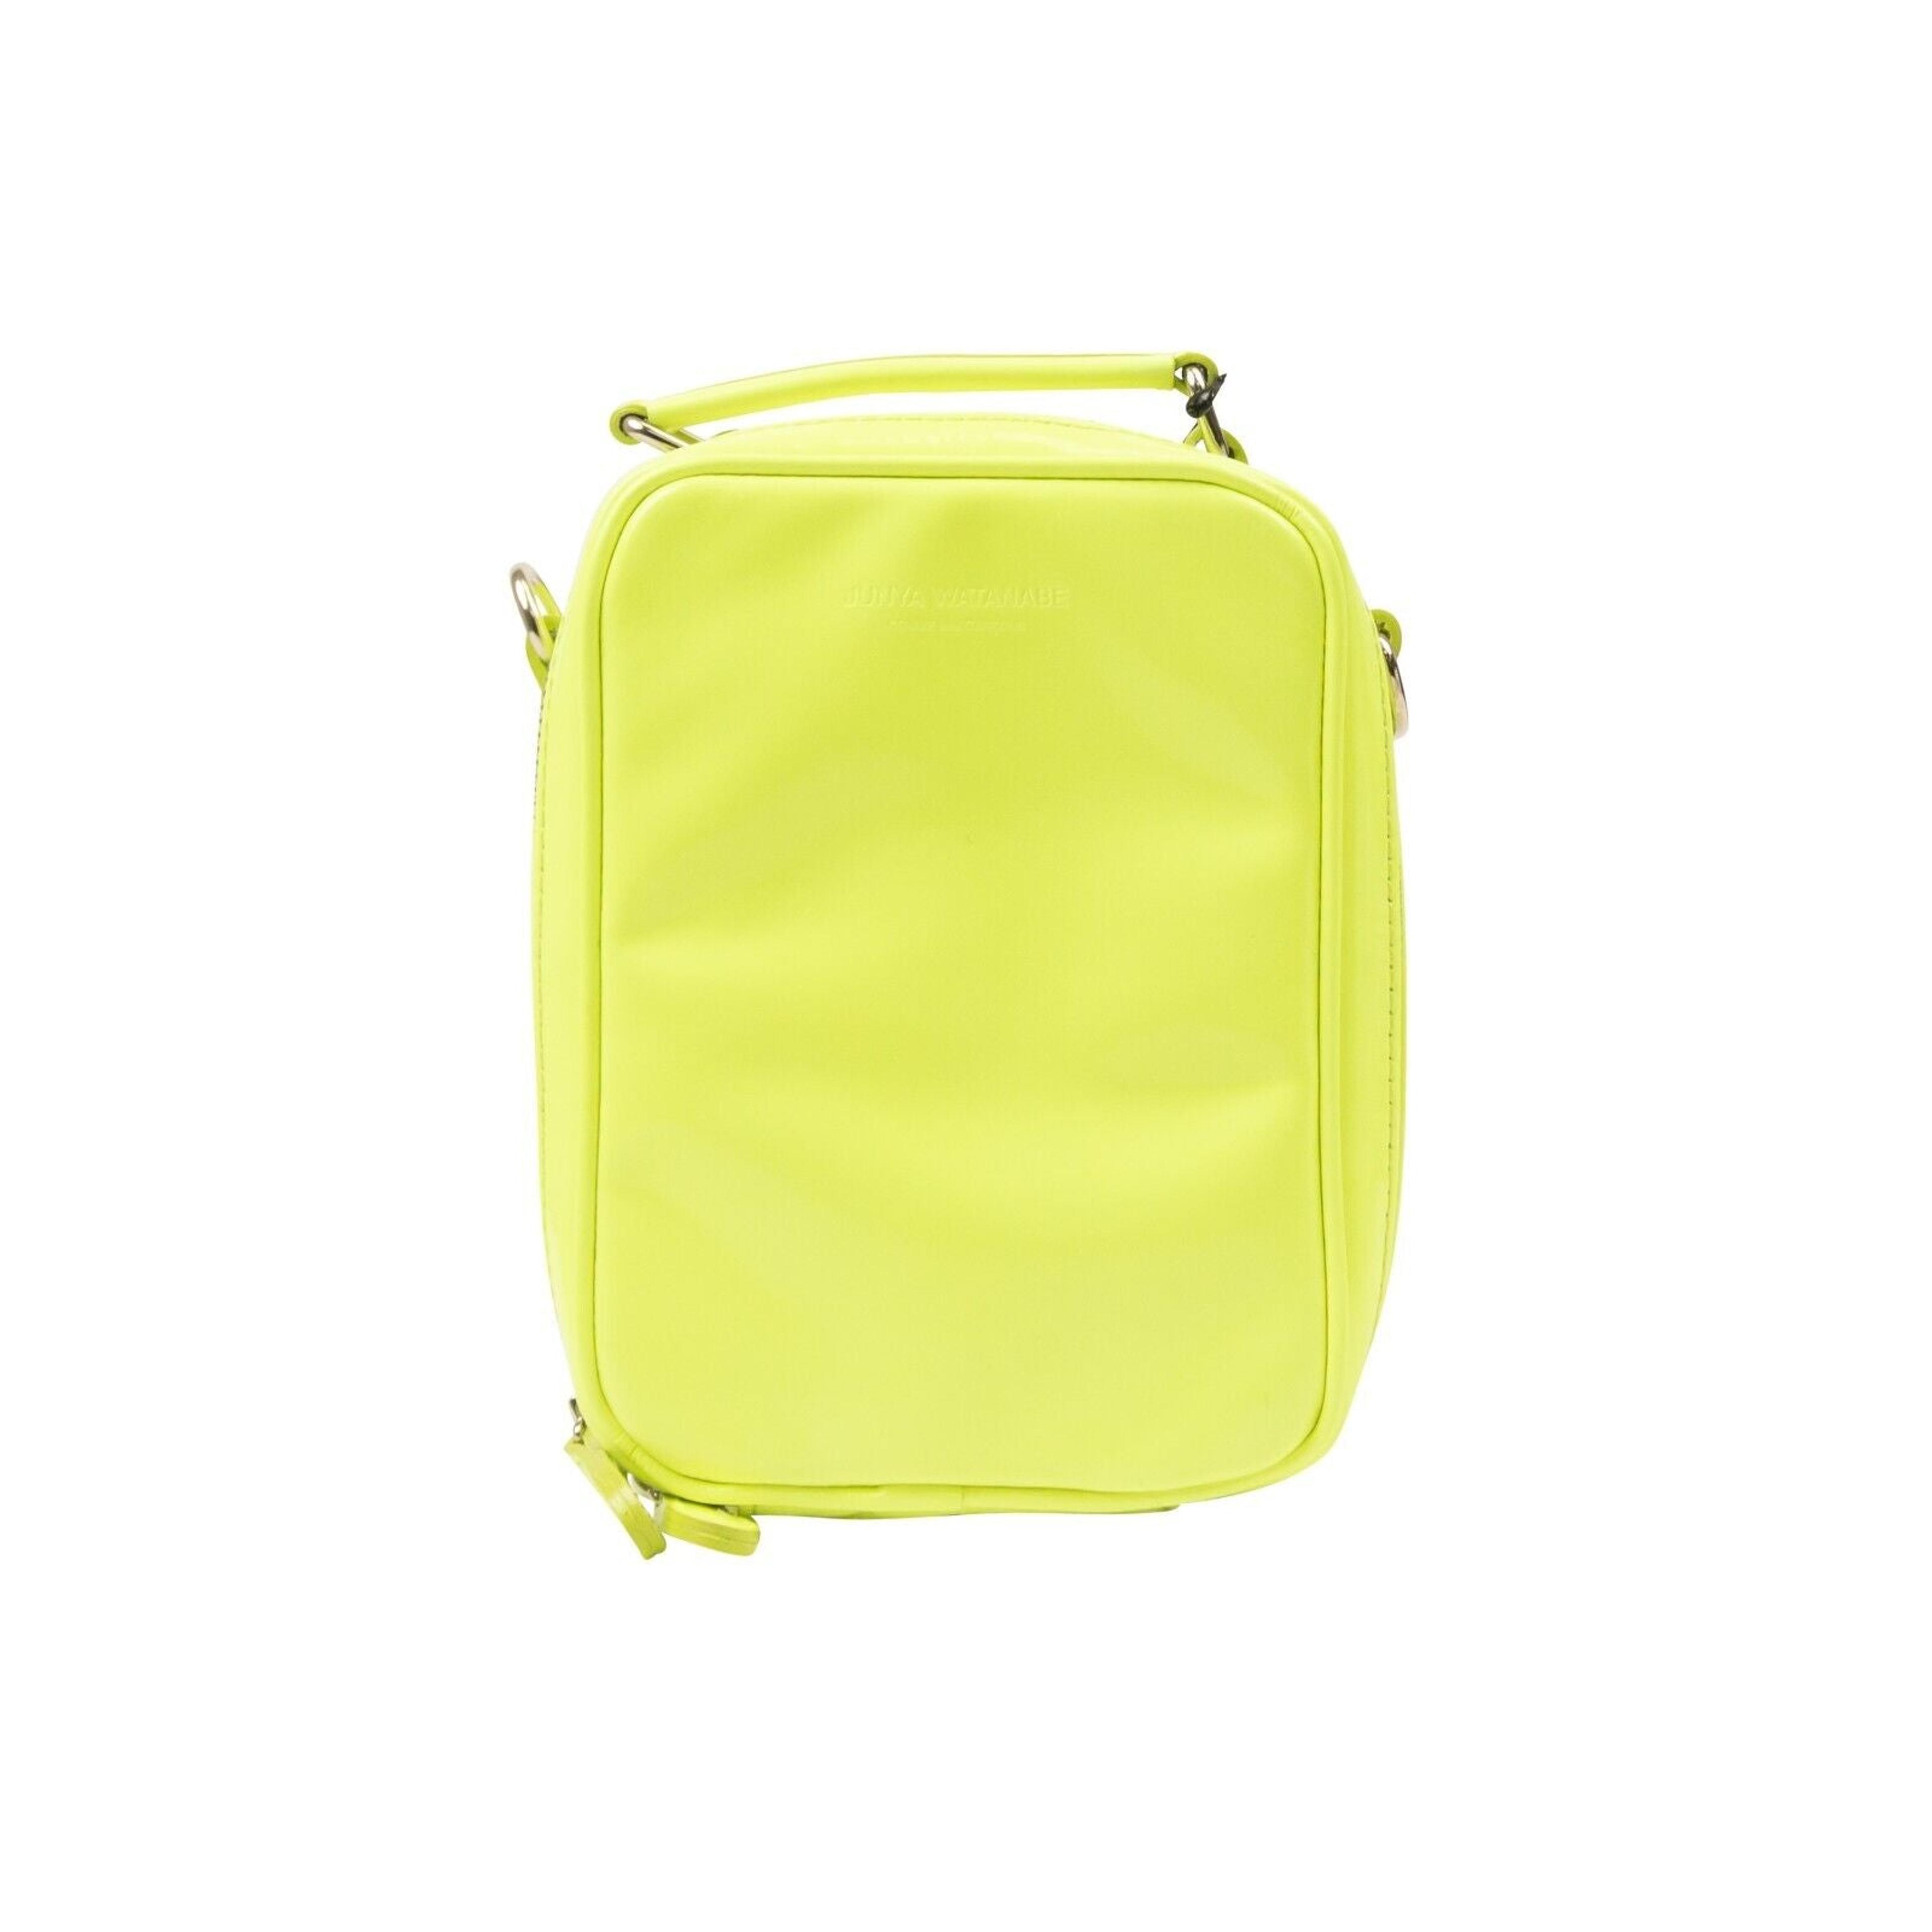 Alternate View 2 of Yellow Mini Crossbody Handbag